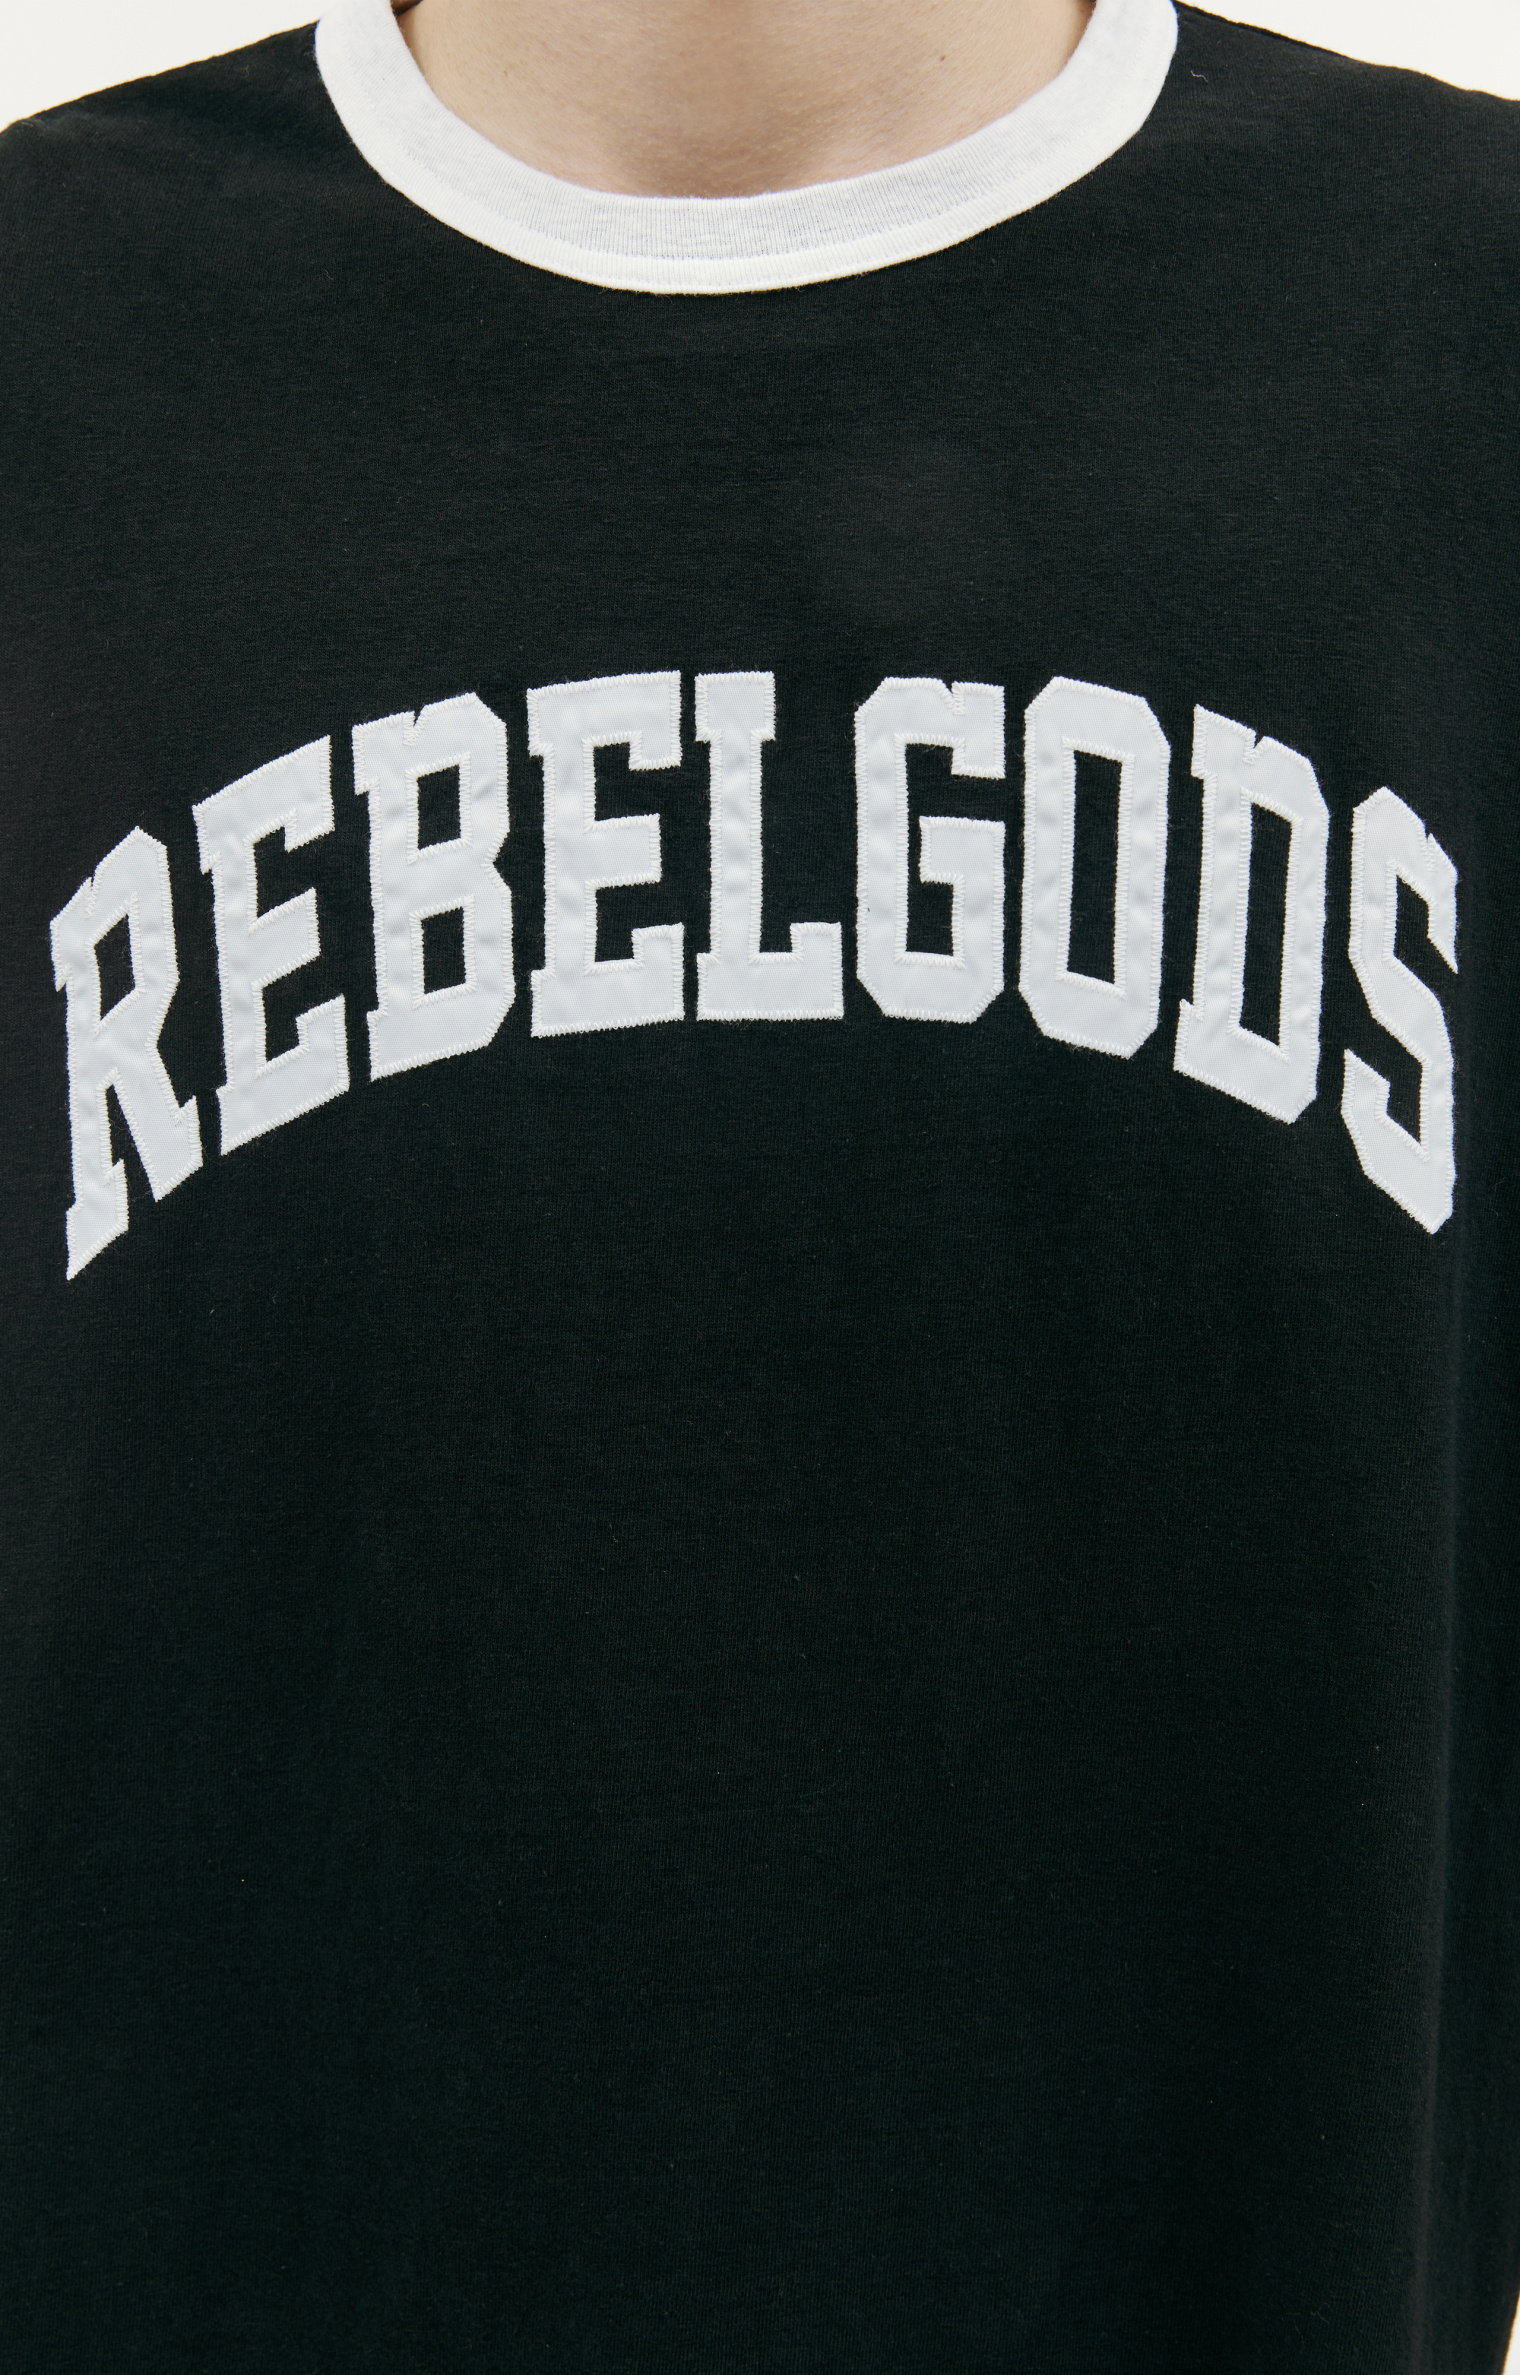 Undercover Rebelgods printed t-shirt